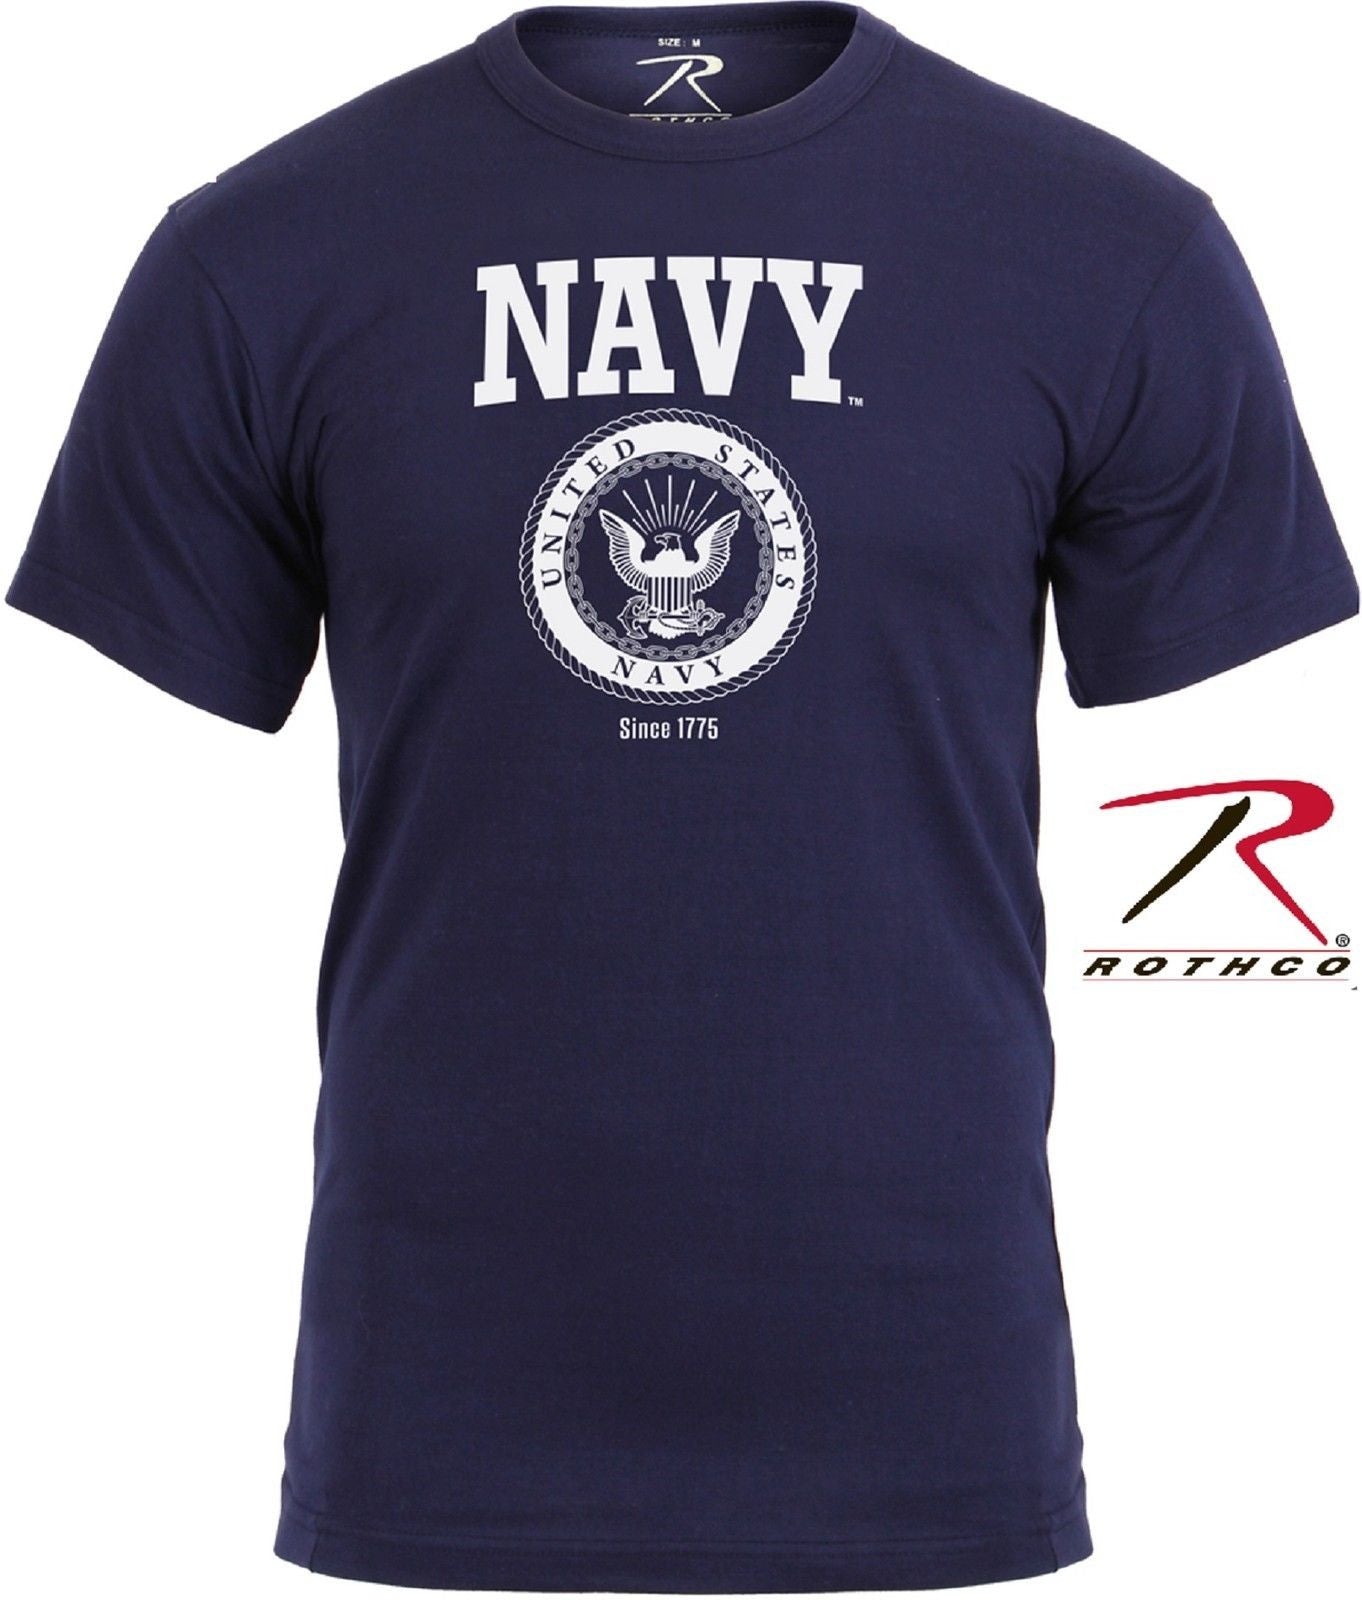 Mens USA Navy Emblem Tee Shirt - Rothco Dark Blue US NAVY TShirts